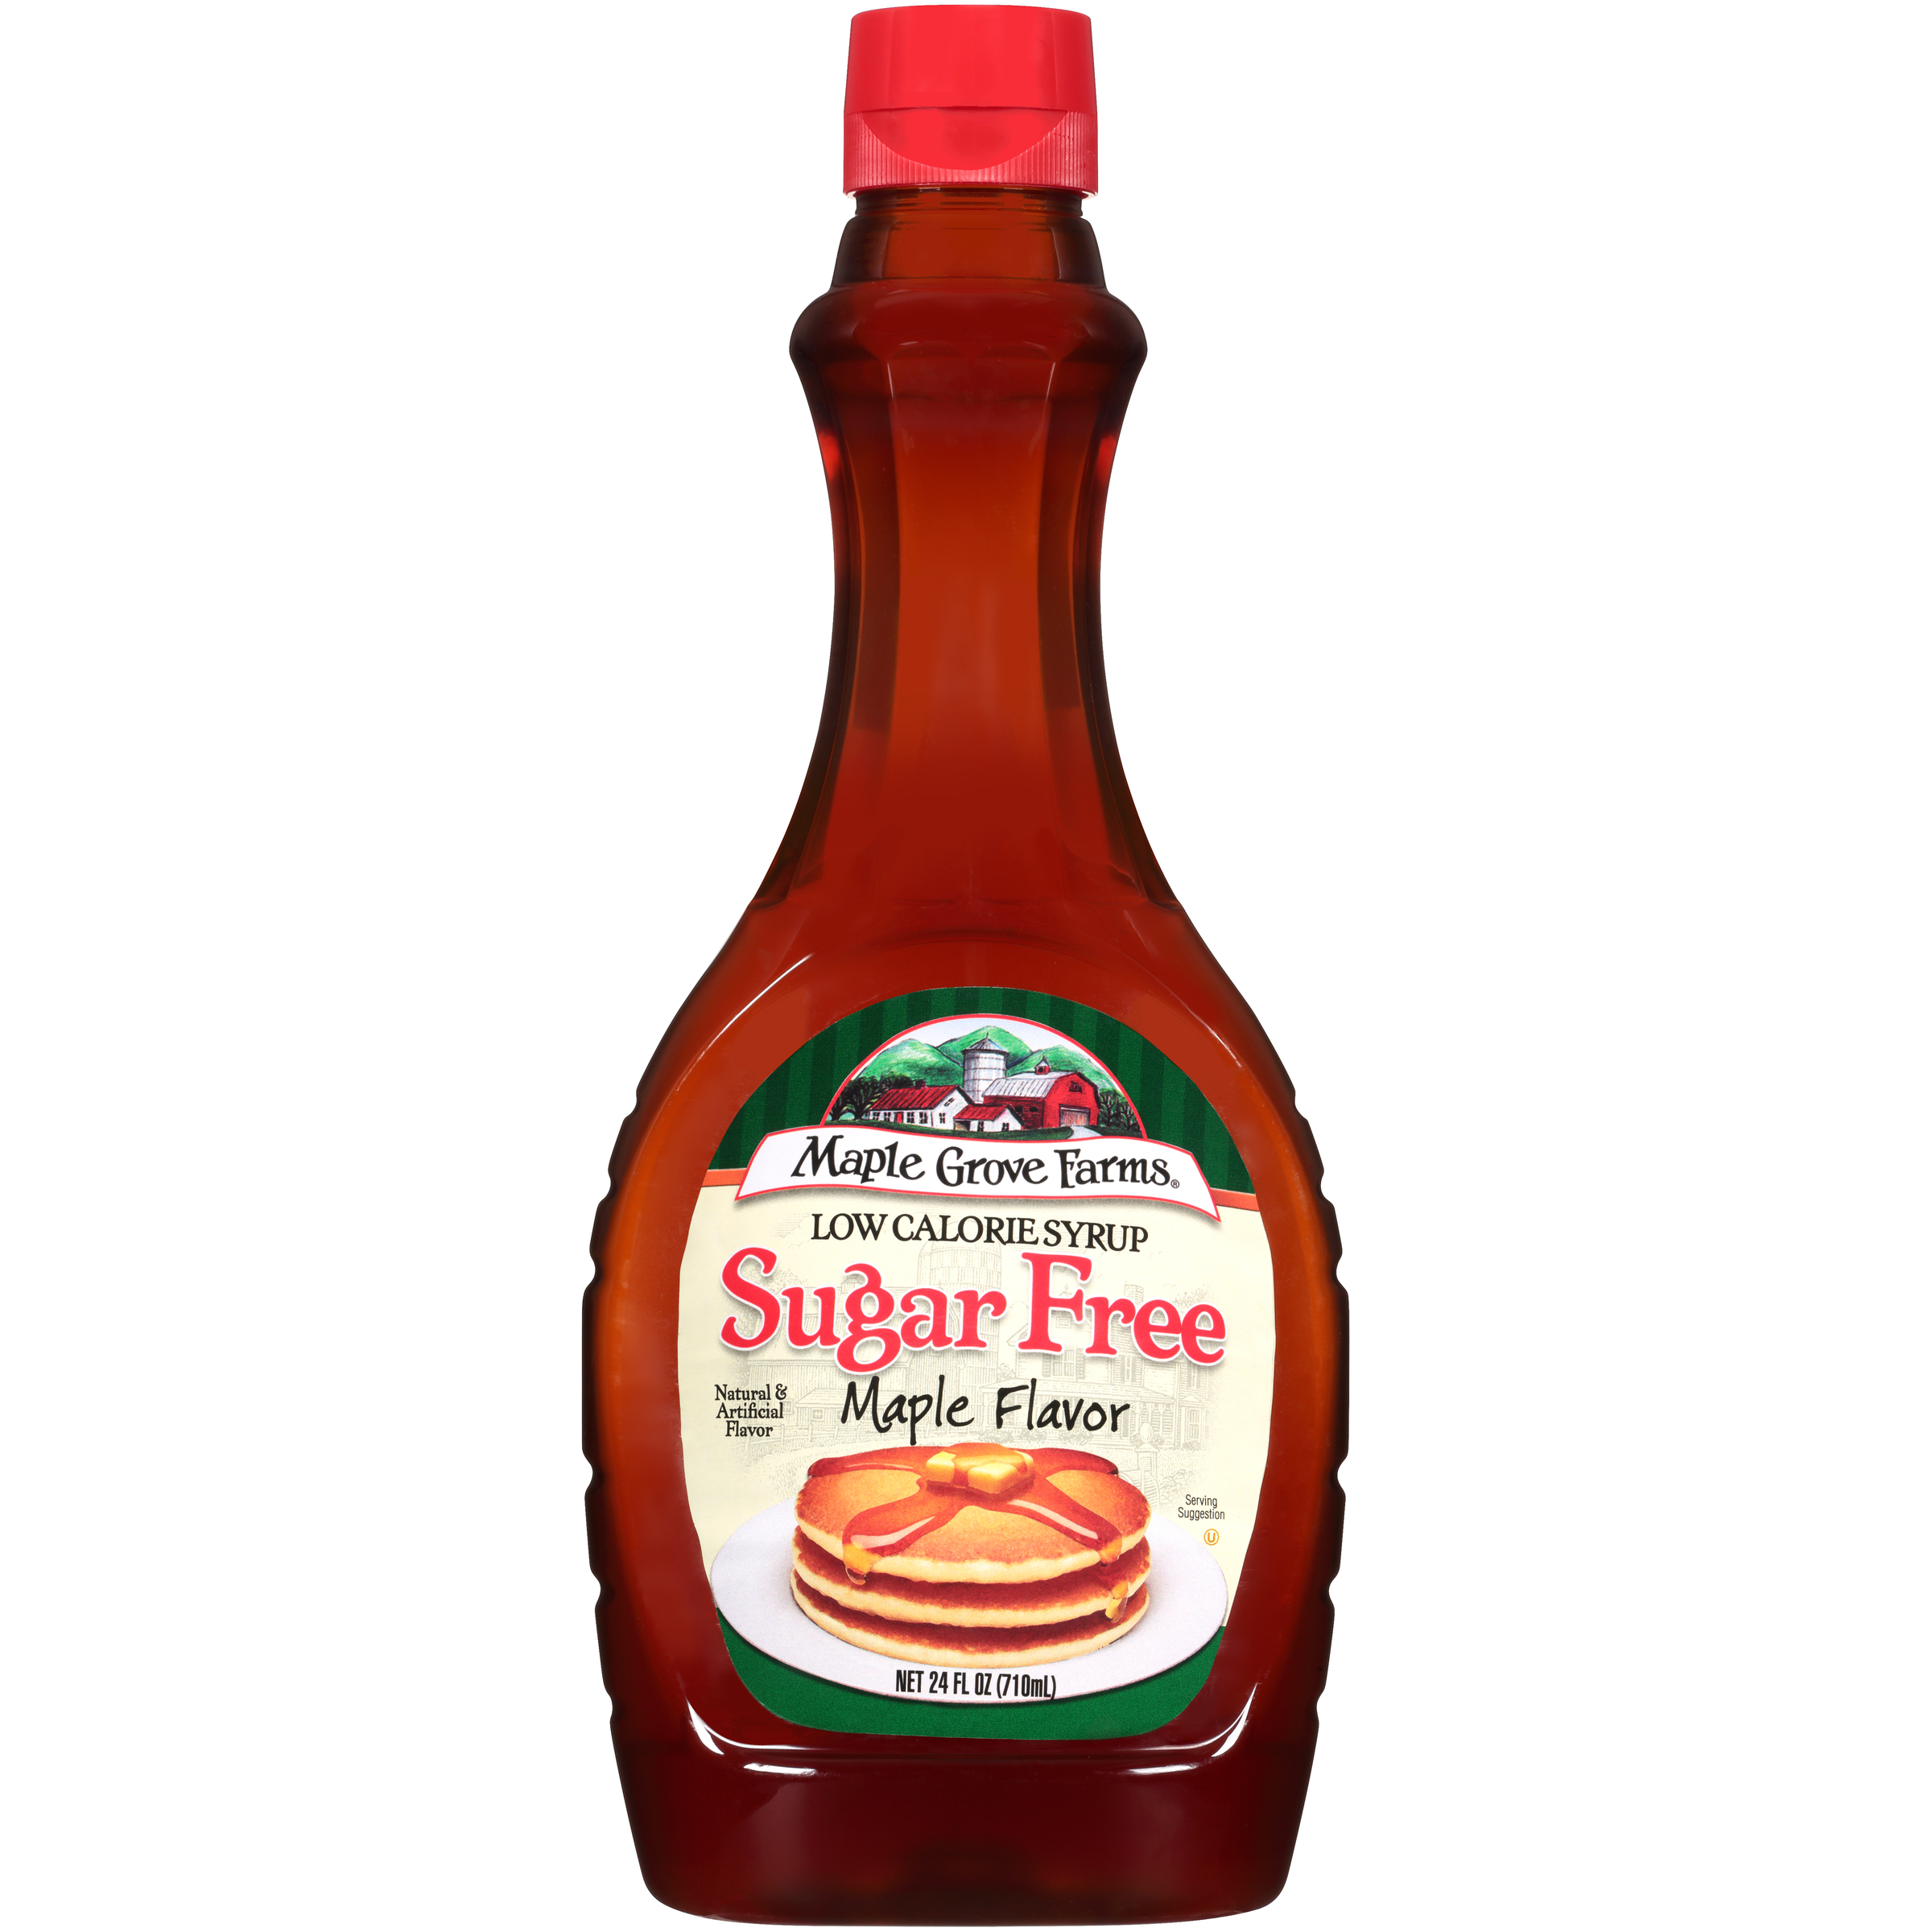 Maple Grove Farms Sugar Free Maple Flavor Syrup, 24 fl oz - image 1 of 5